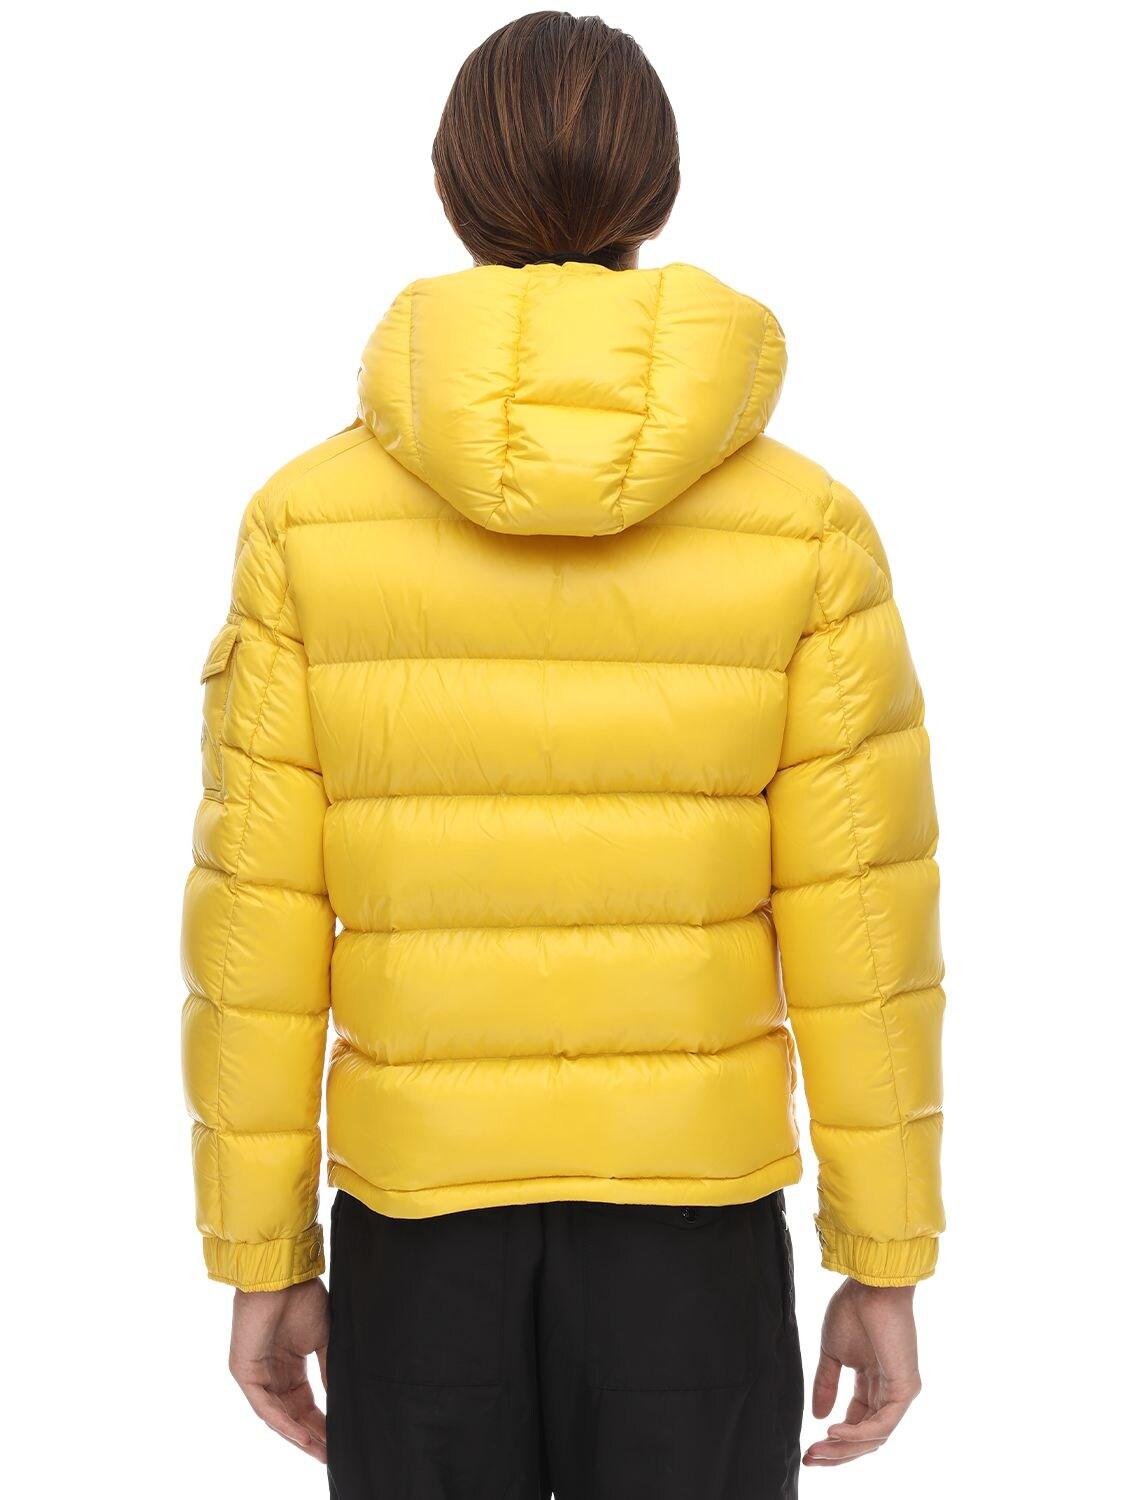 moncler jacket yellow